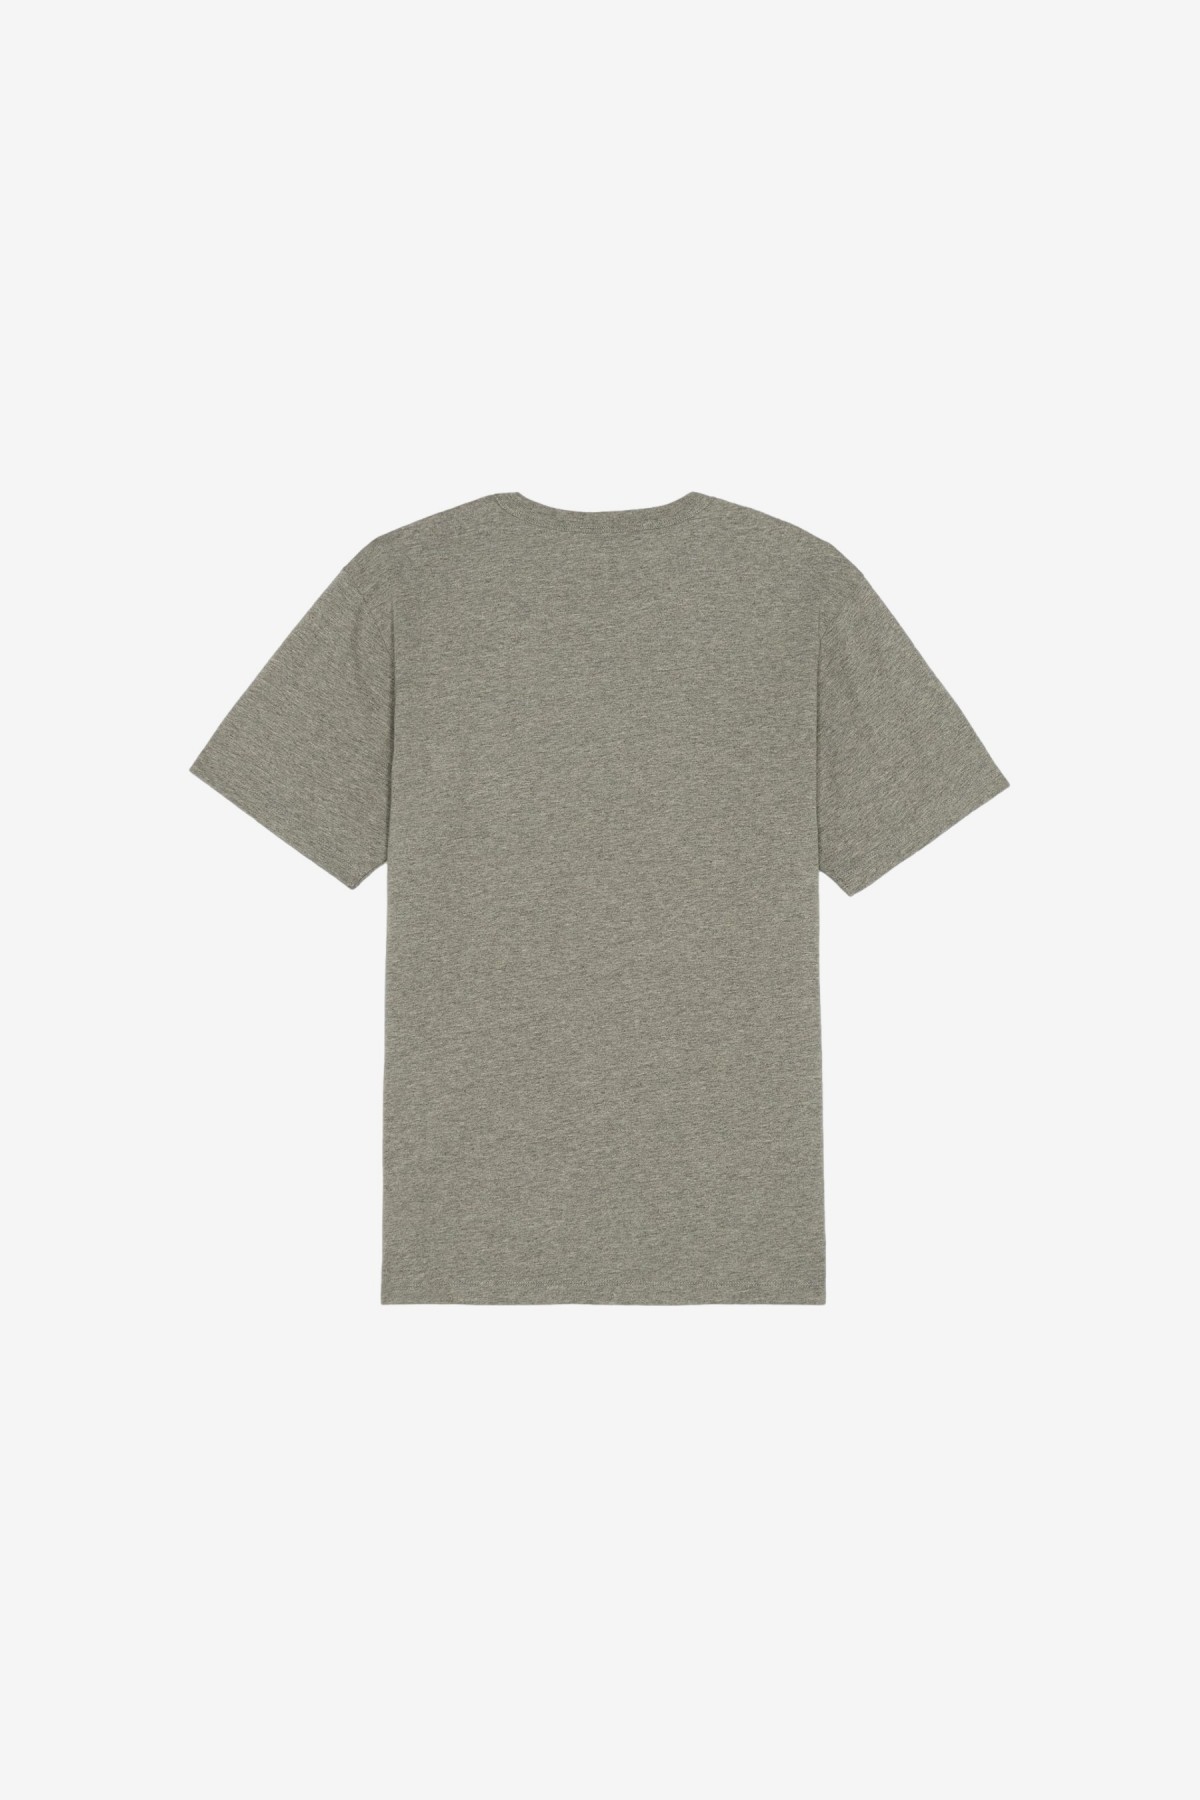 Maison Kitsuné Monochrome Fox Head Patch Classic Tee-Shirt in Grey Melange